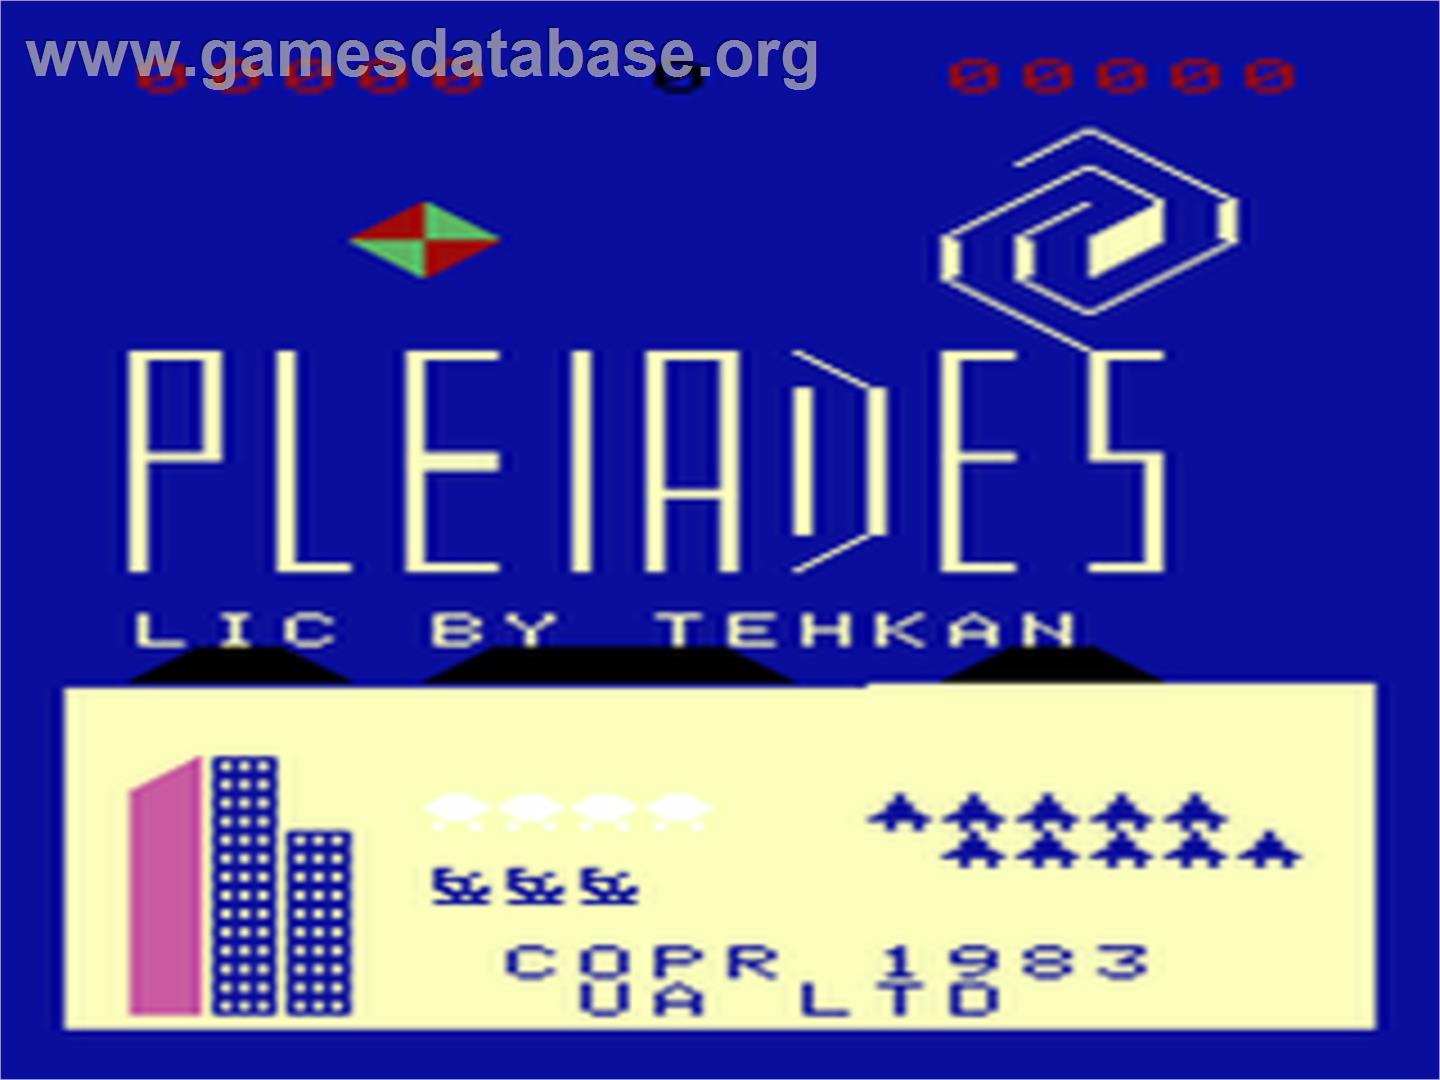 Pleiades - Emerson Arcadia 2001 - Artwork - Title Screen